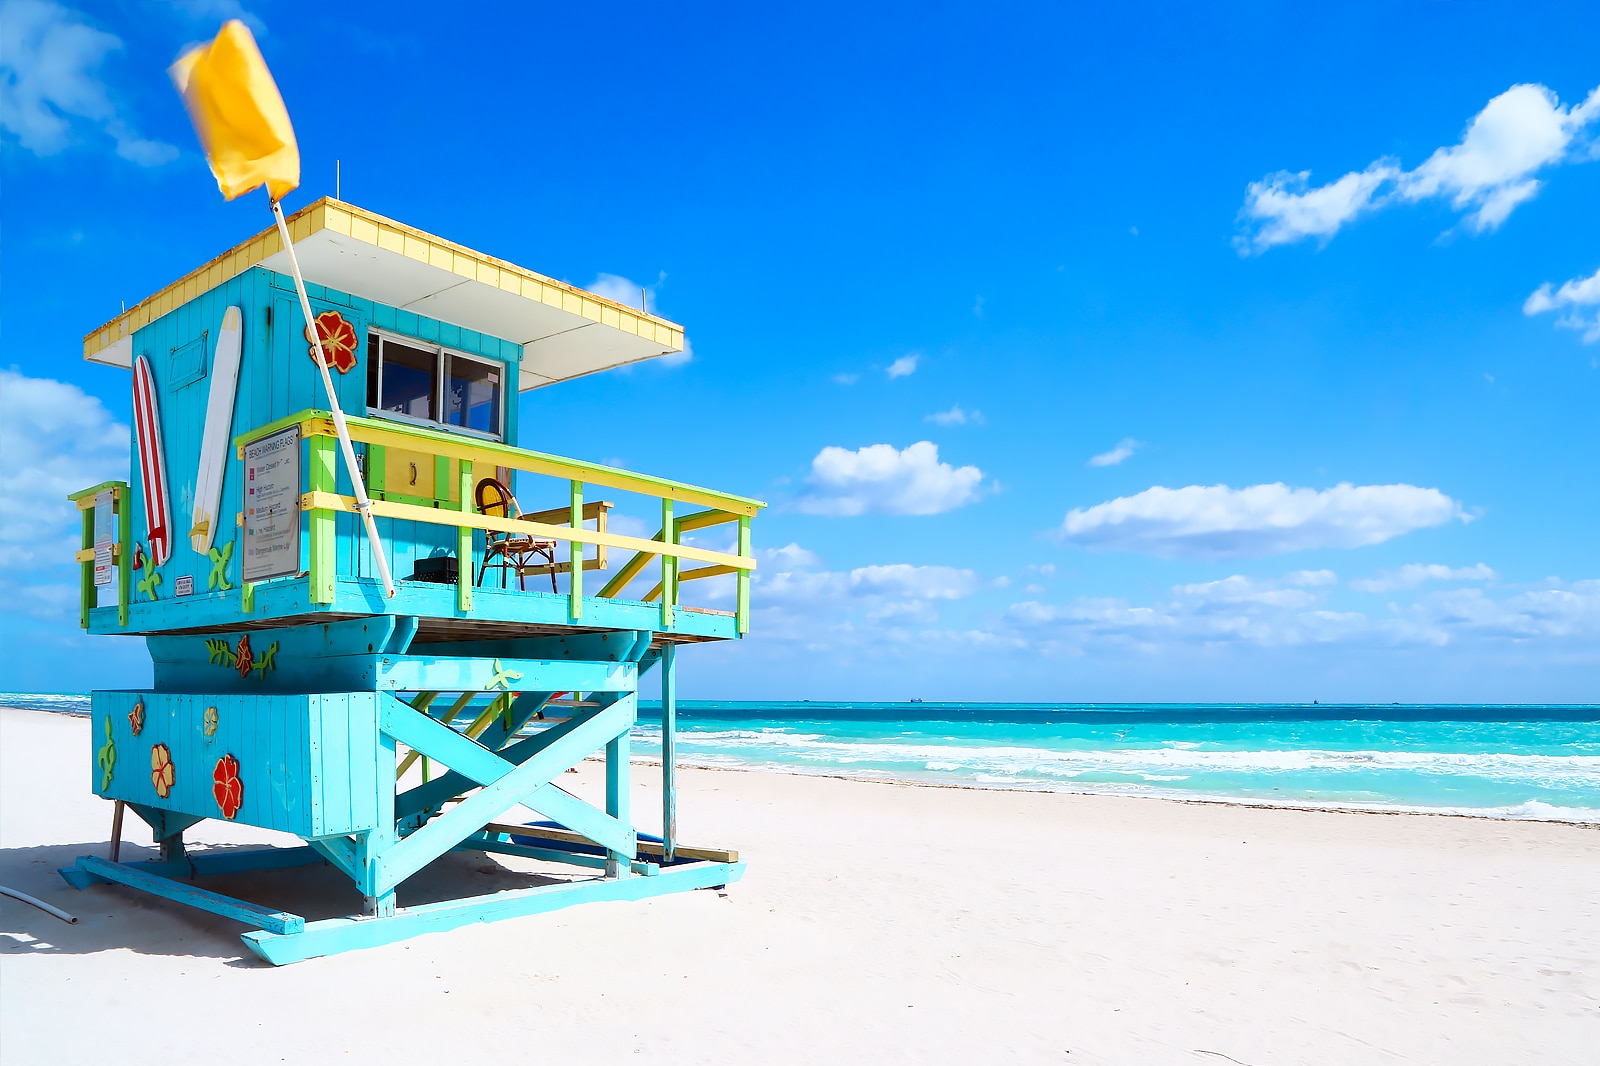 Miami: A Paradise destination where every day feels like a dream